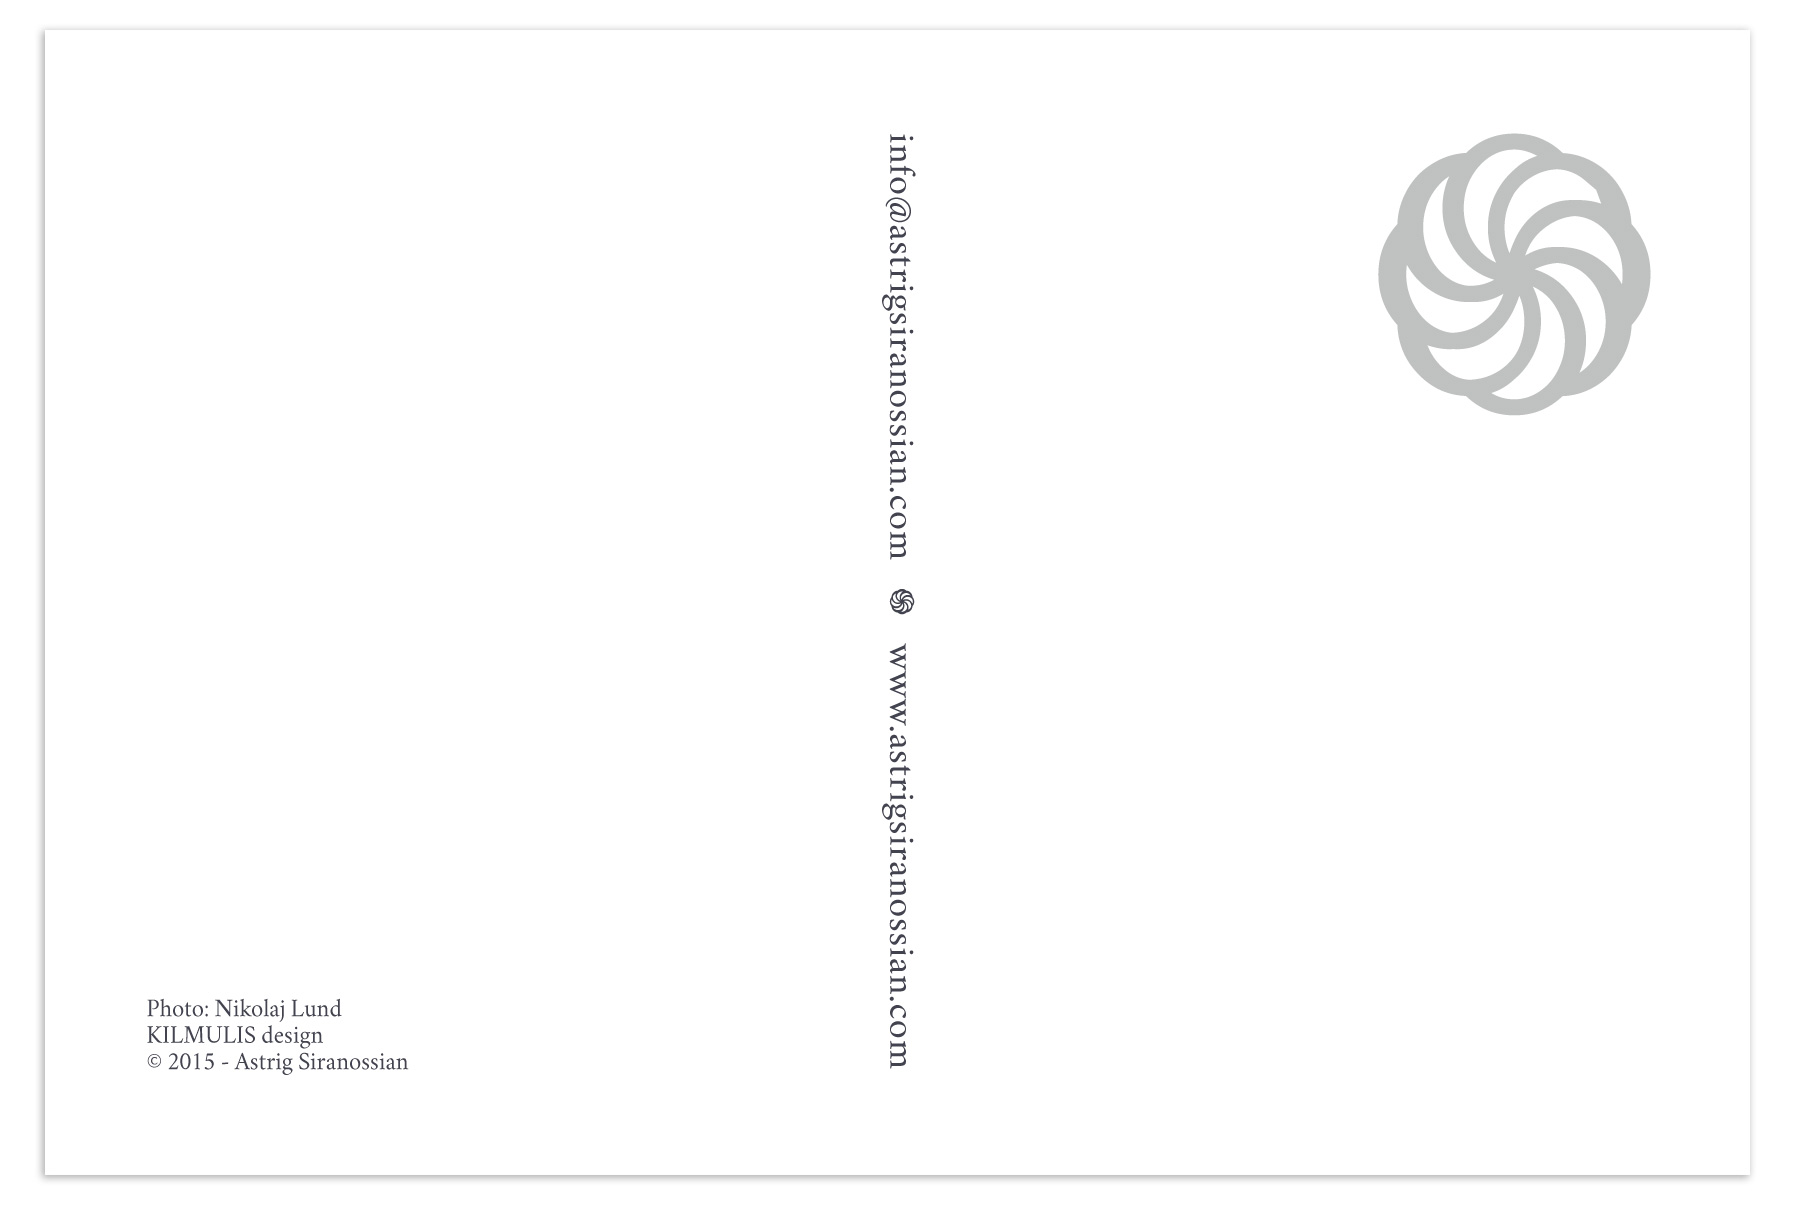 Kilmulis design - Astrig Siranossian - postcards 04